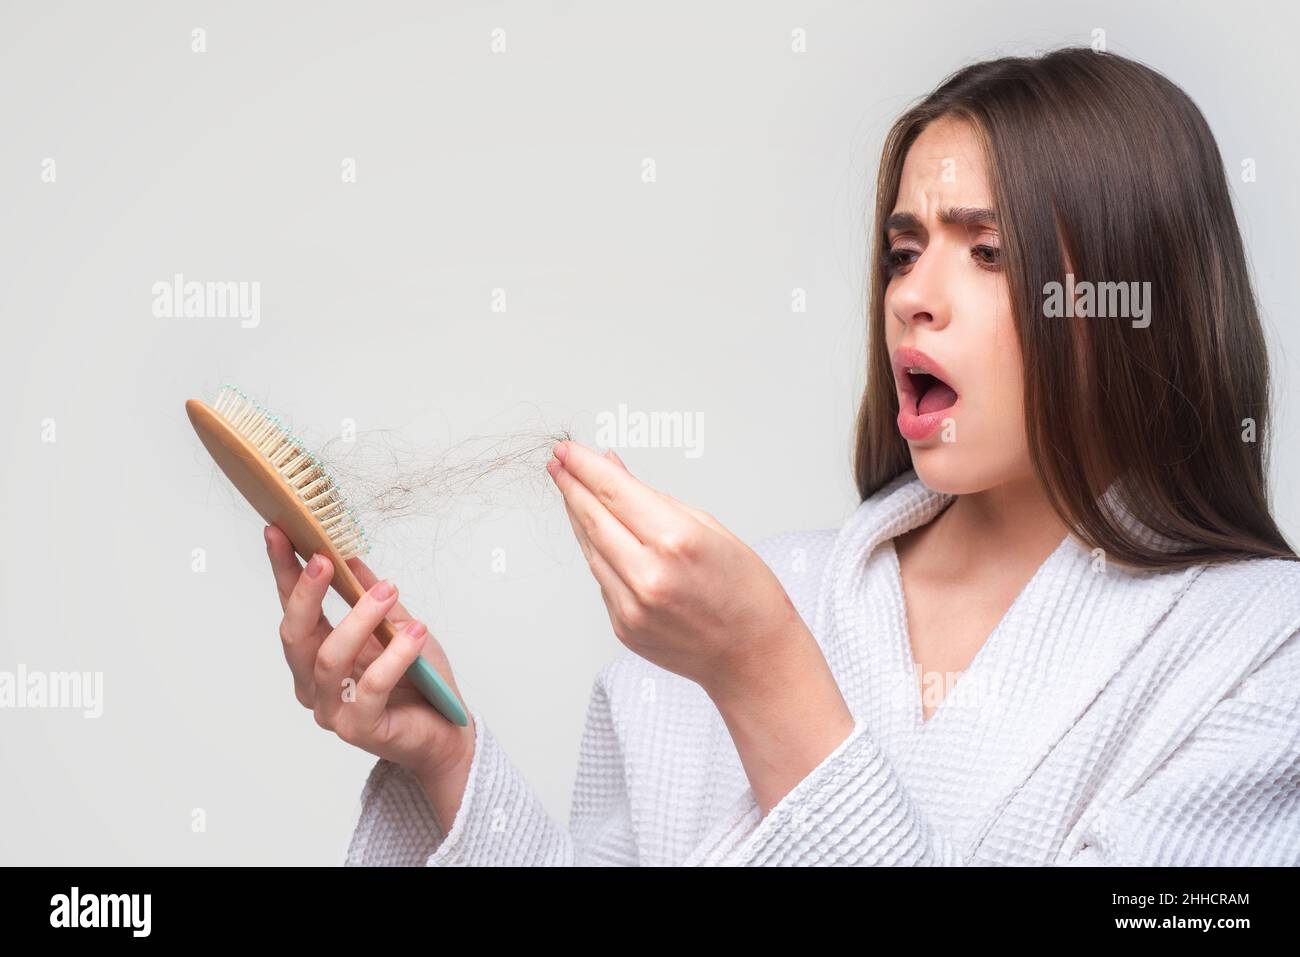 Woman loosing hair. Hair loss problem, baldness. Stock Photo